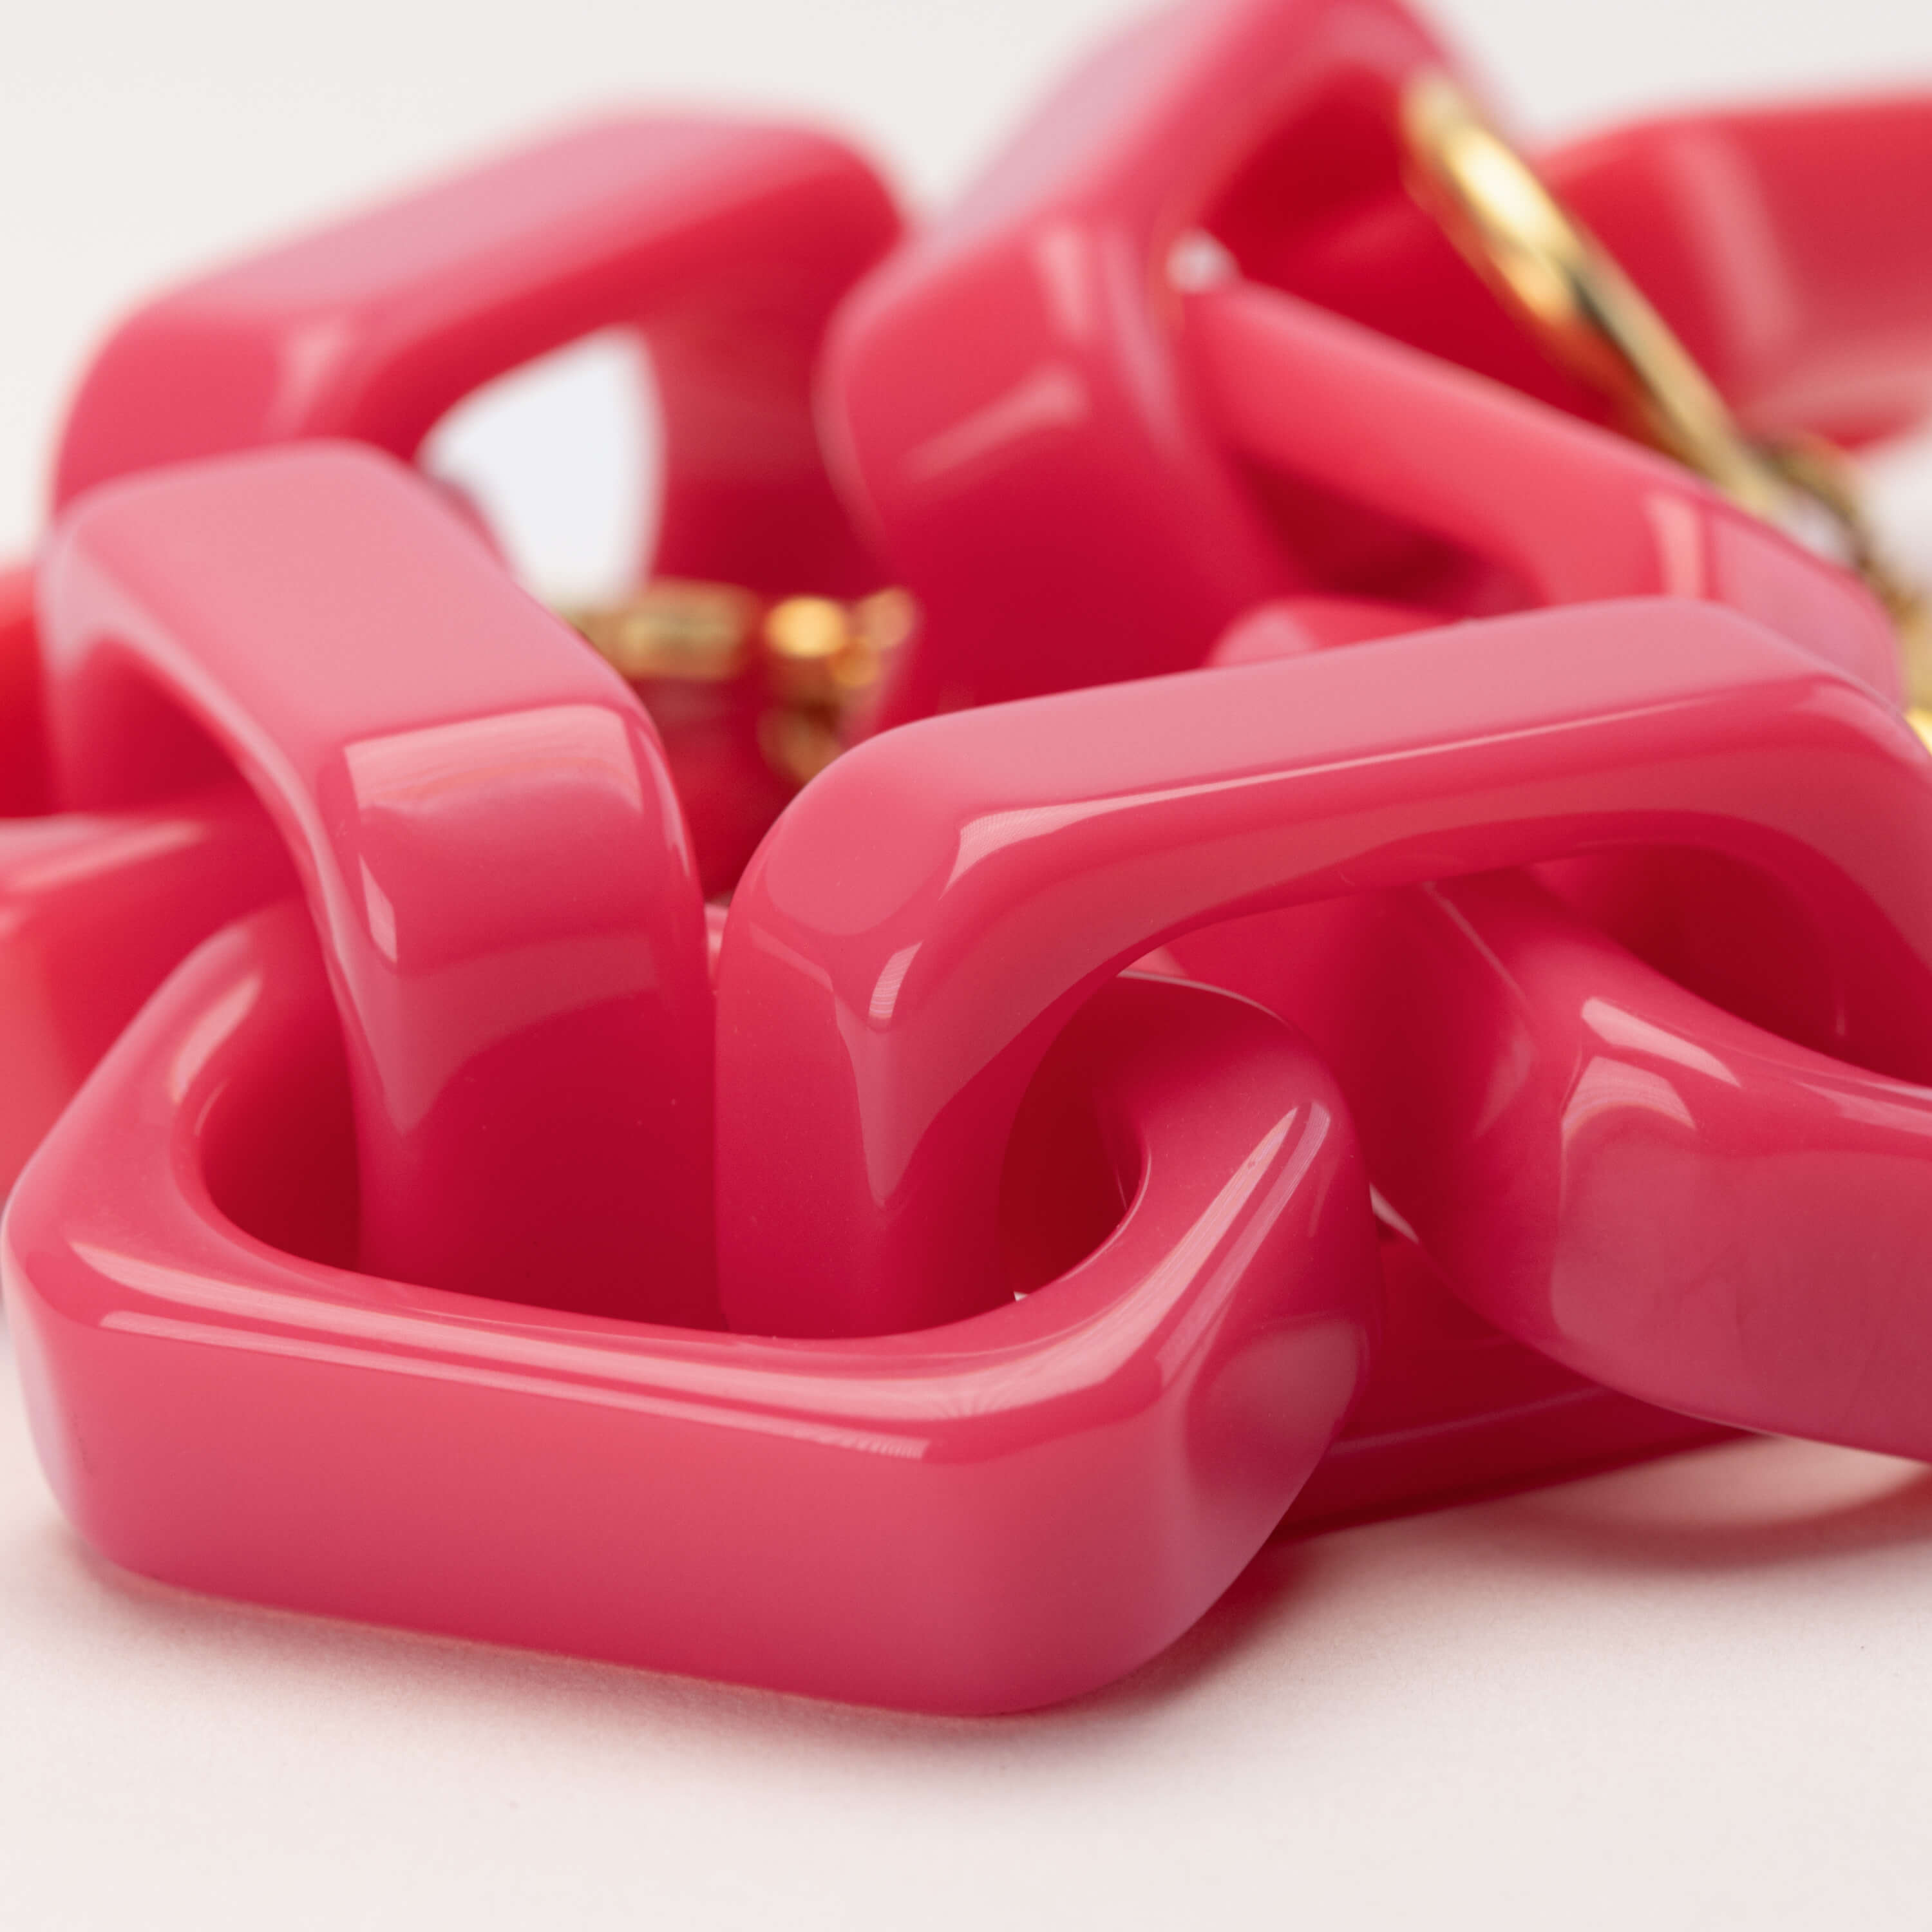 Chunky Chain Link Bracelet - Pink